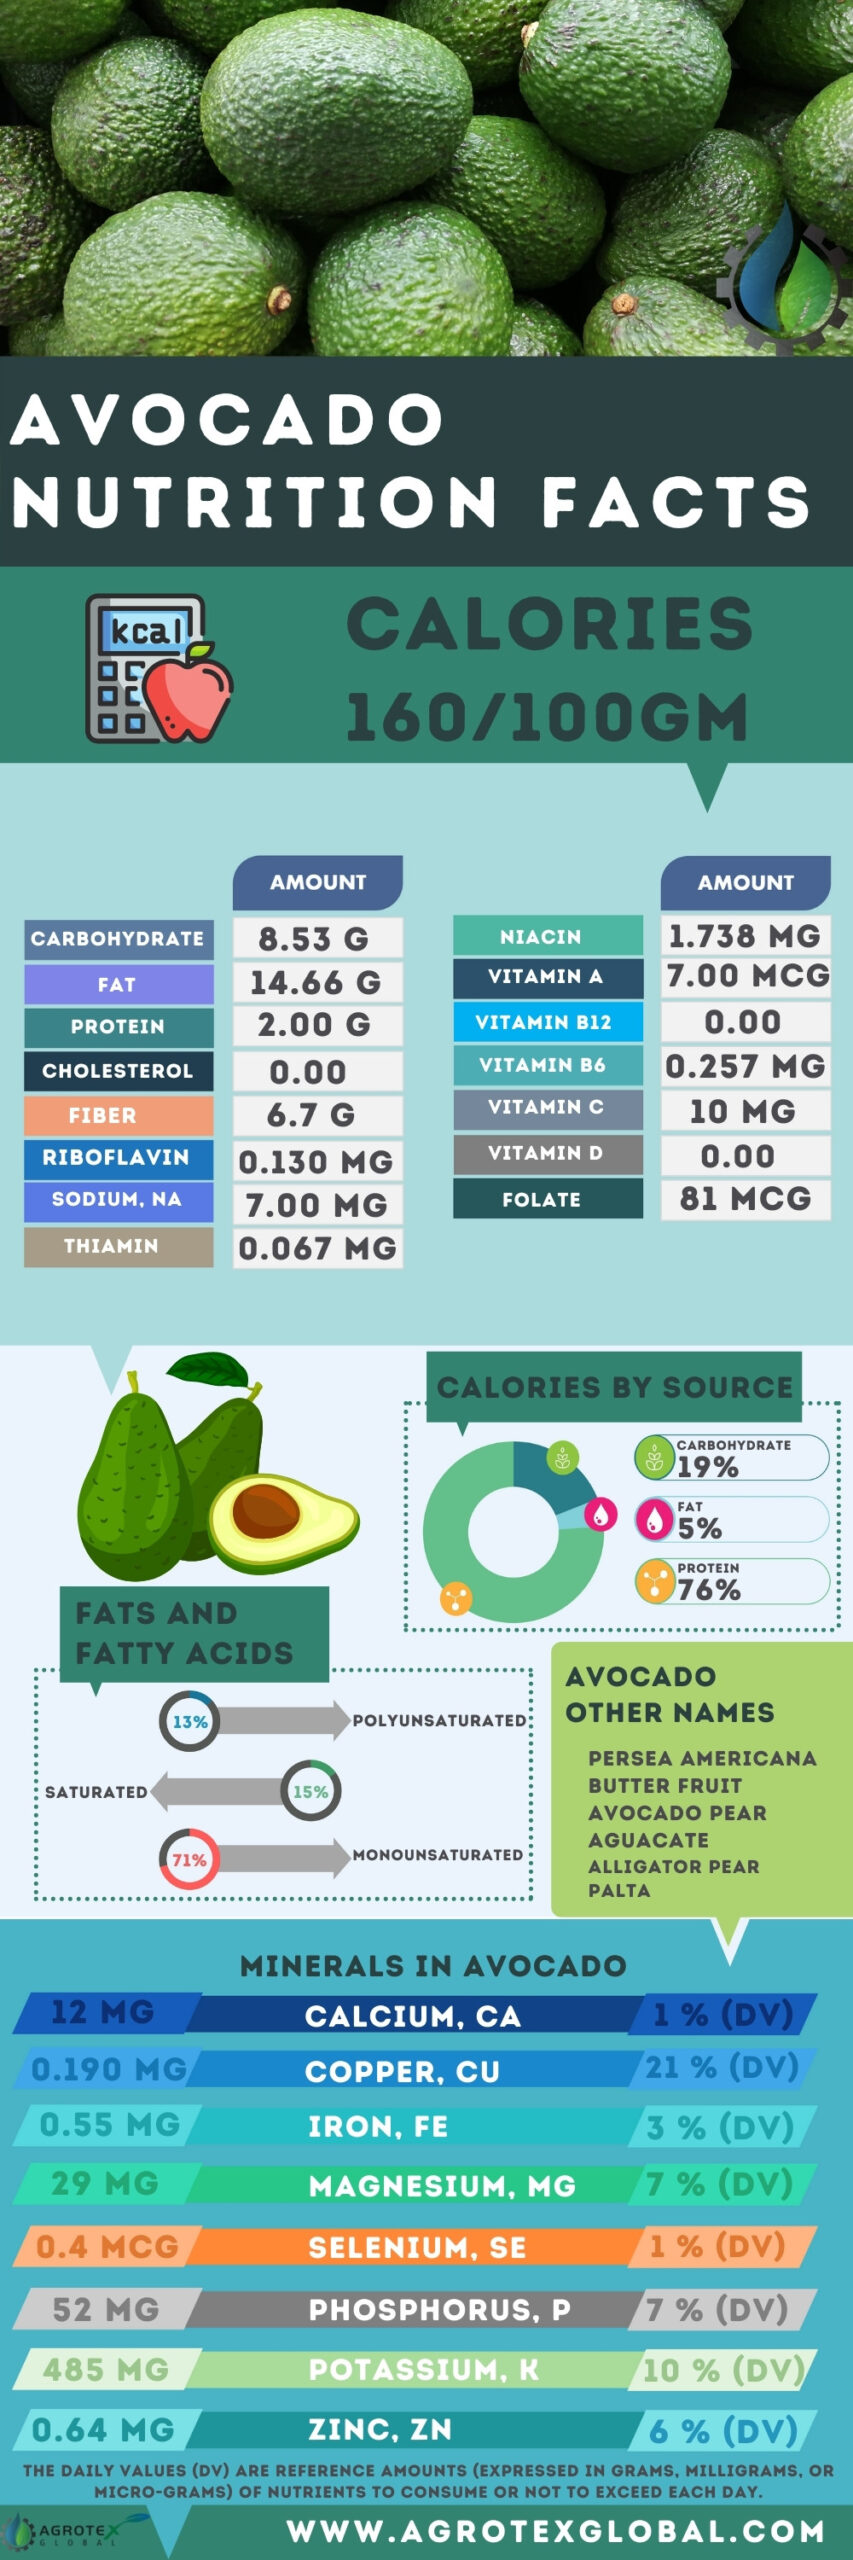 Avocado nutrition facts calorie content infographic